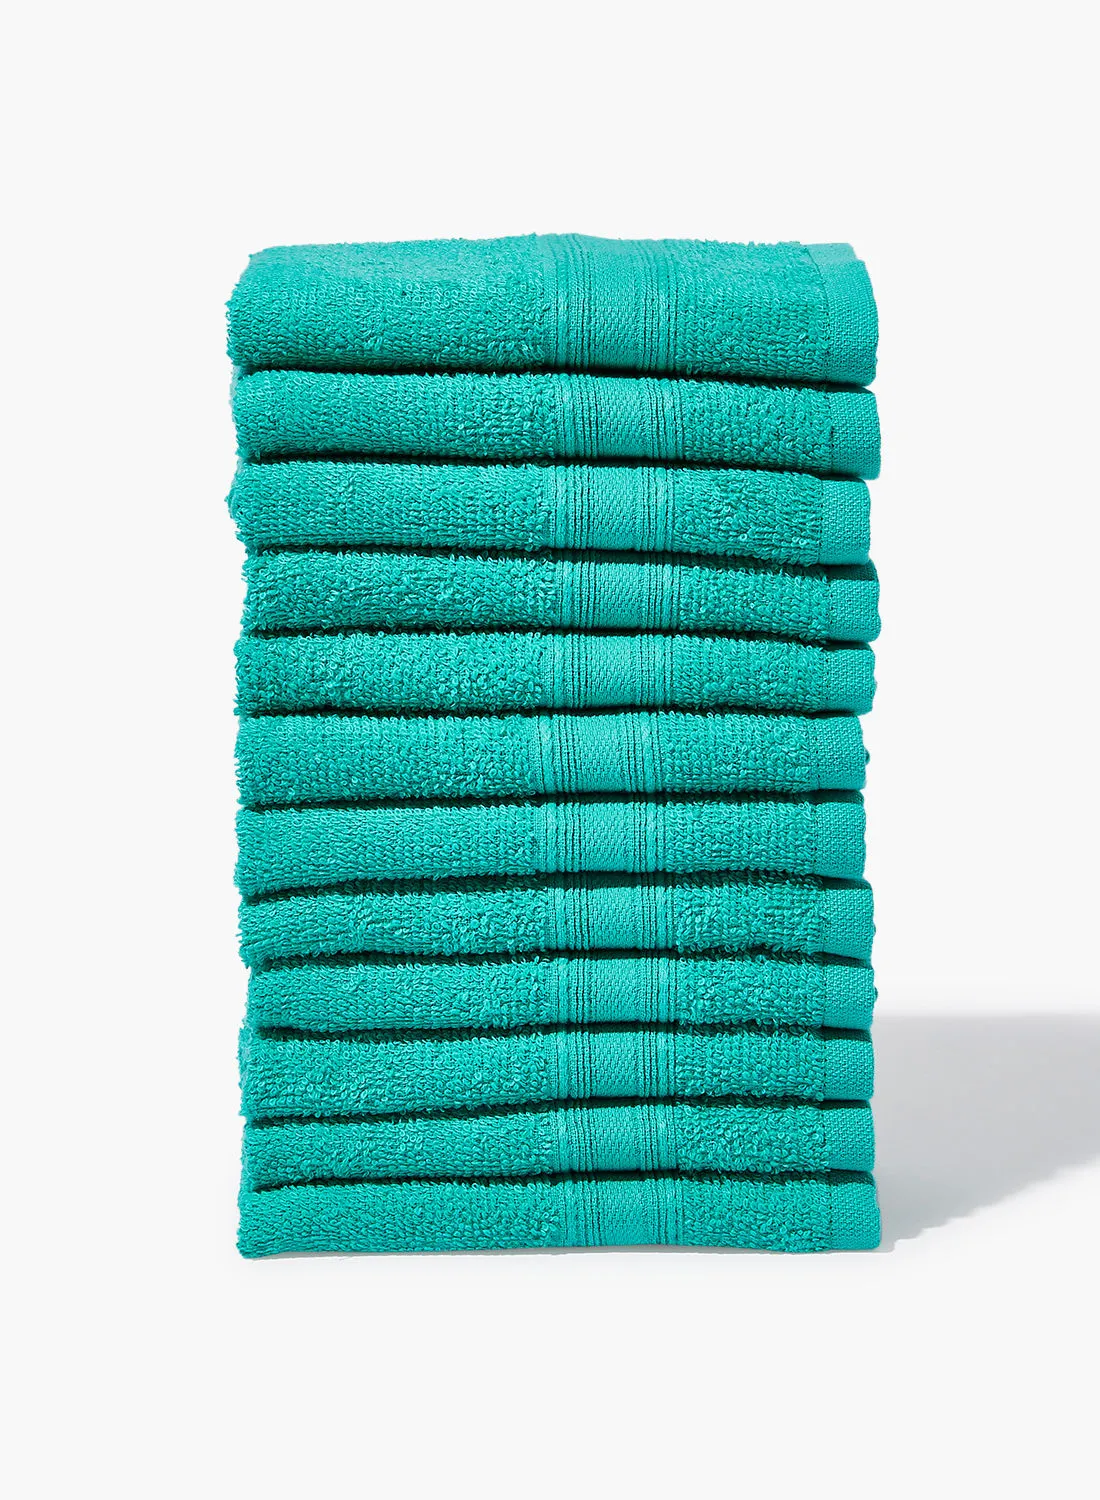 Amal 12 Piece Face Towel Set - 400 GSM 100% Cotton Terry - Emerald Color - Quick Dry - Super Absorbent